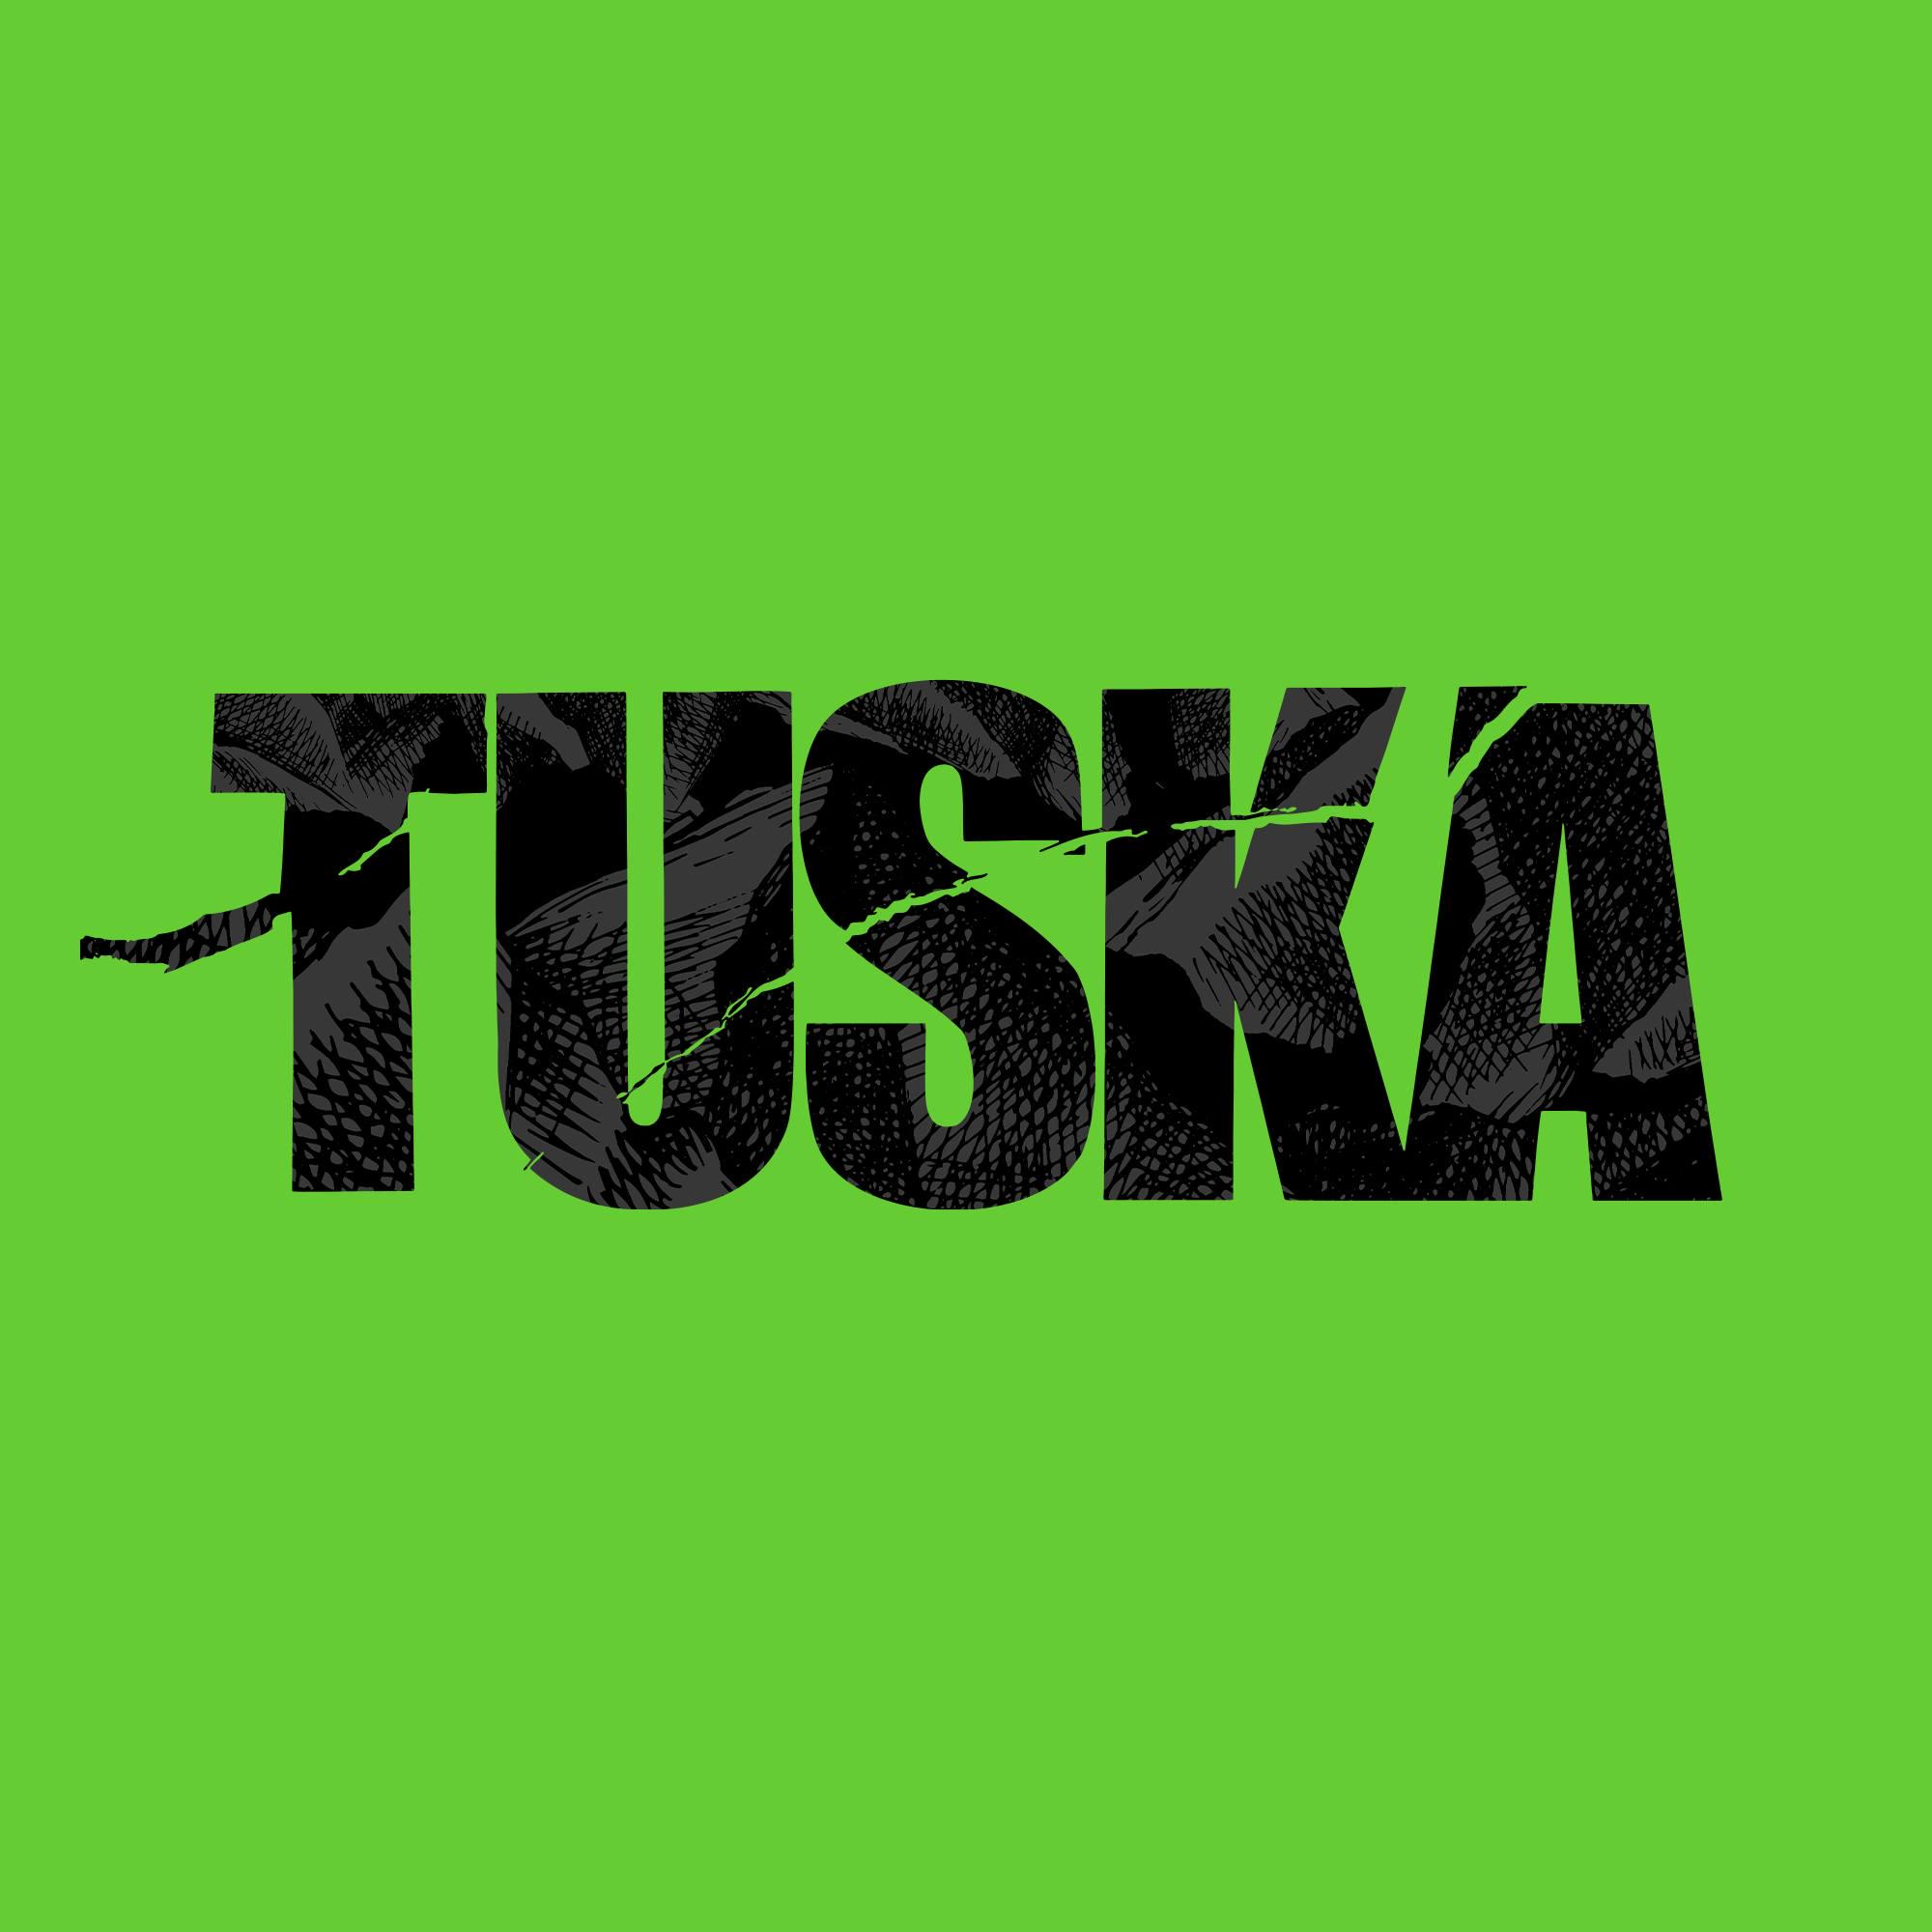 Tuska Metal Festival